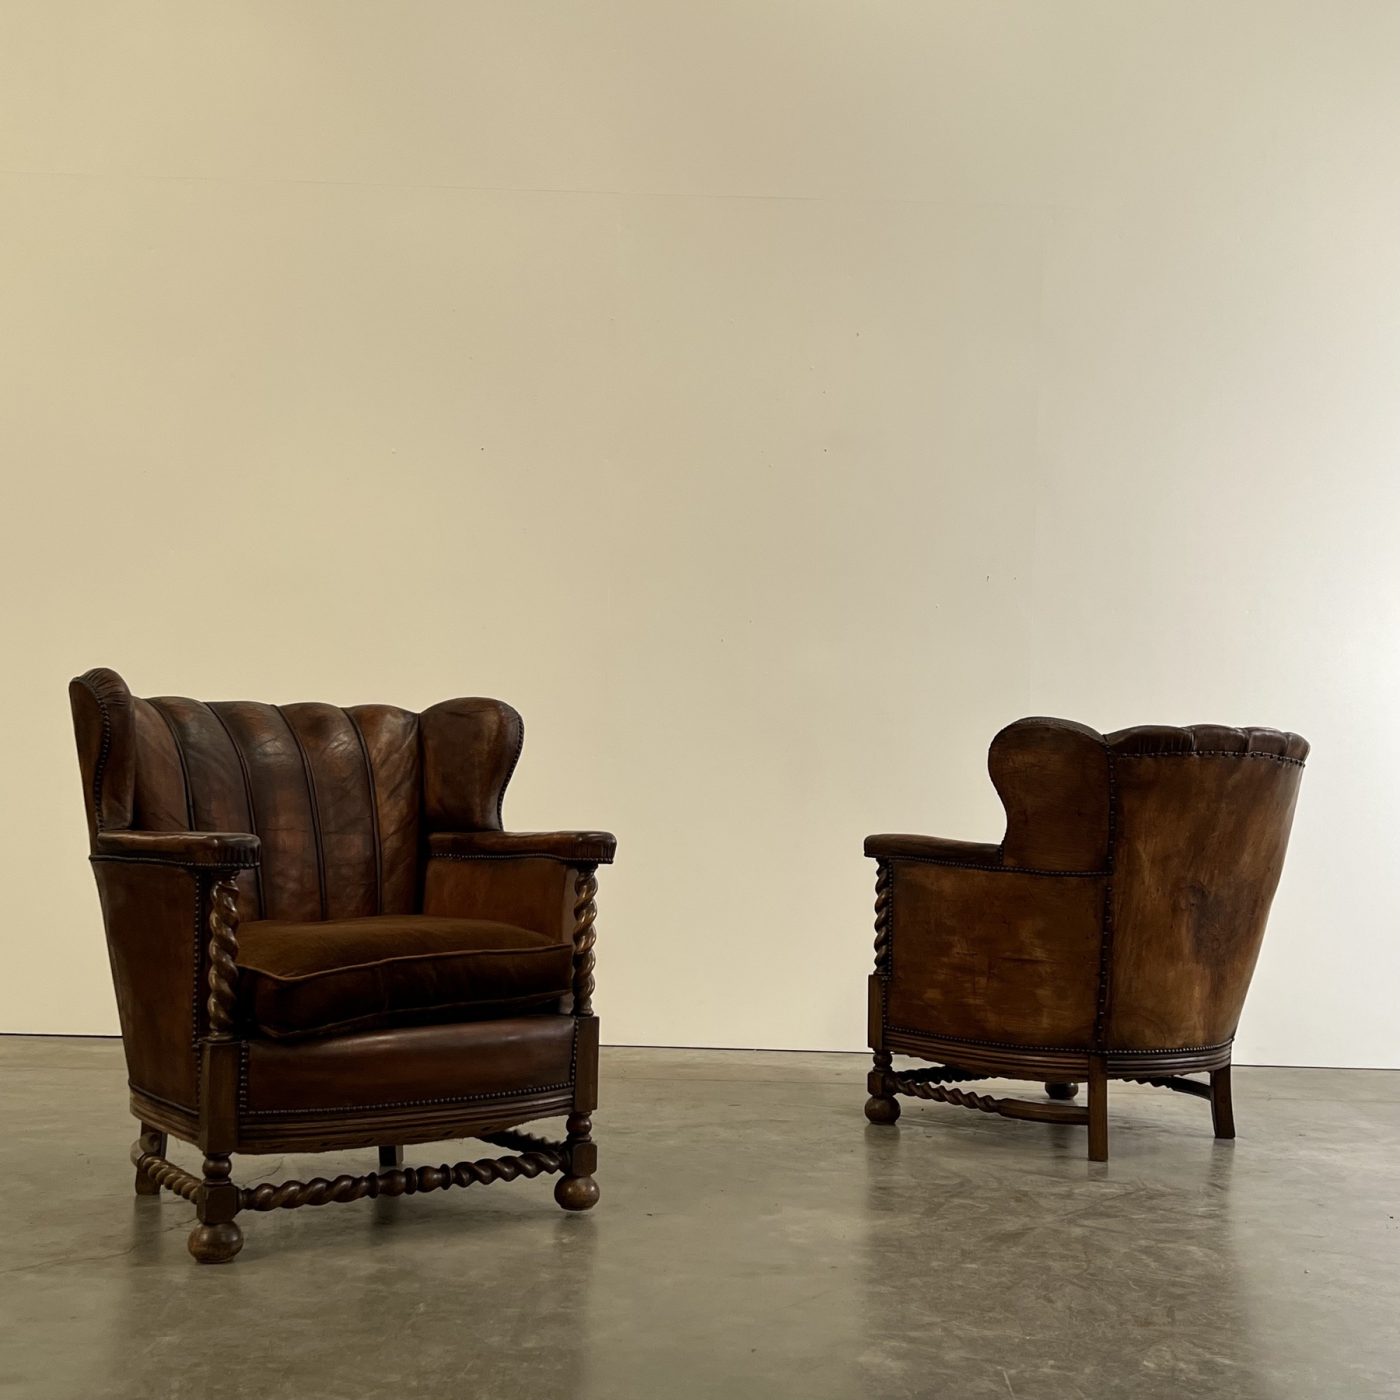 objet-vagabond-leather-chairs0005